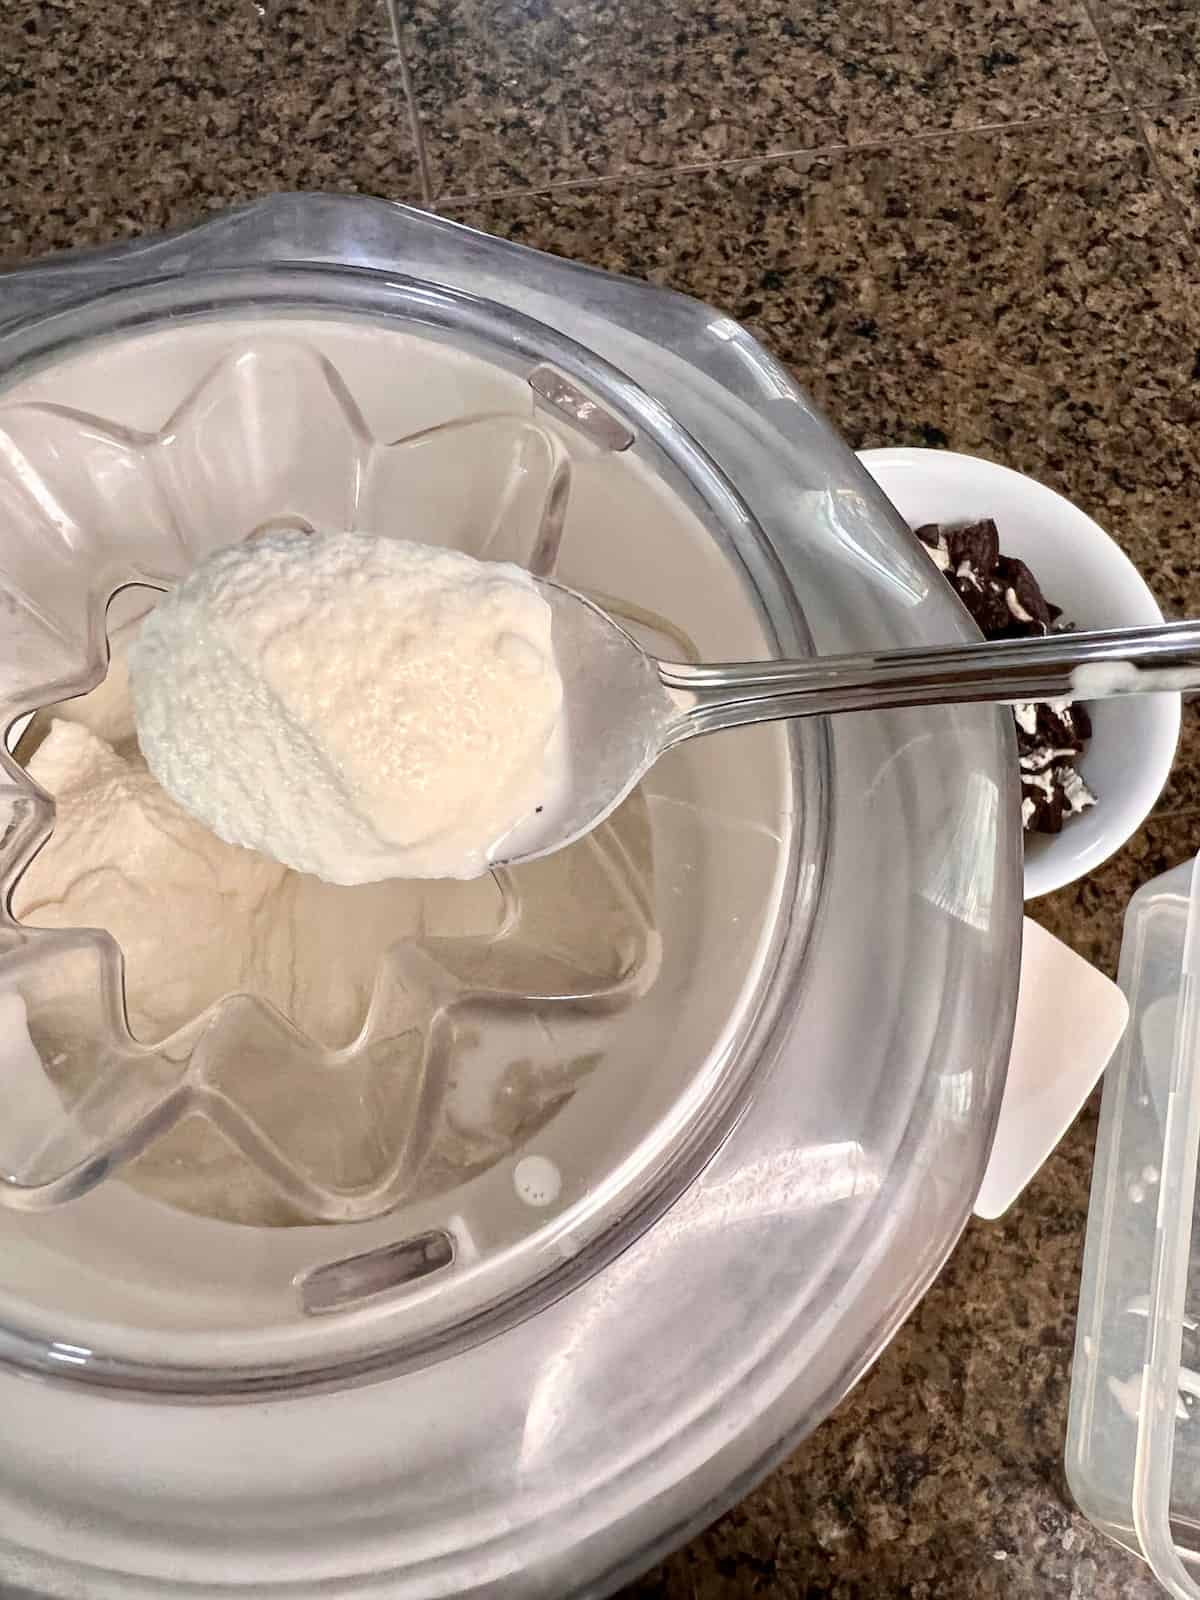 Oreo Cookies & Cream Ice Cream Spoon scooping freshly churned ice cream from the maker.